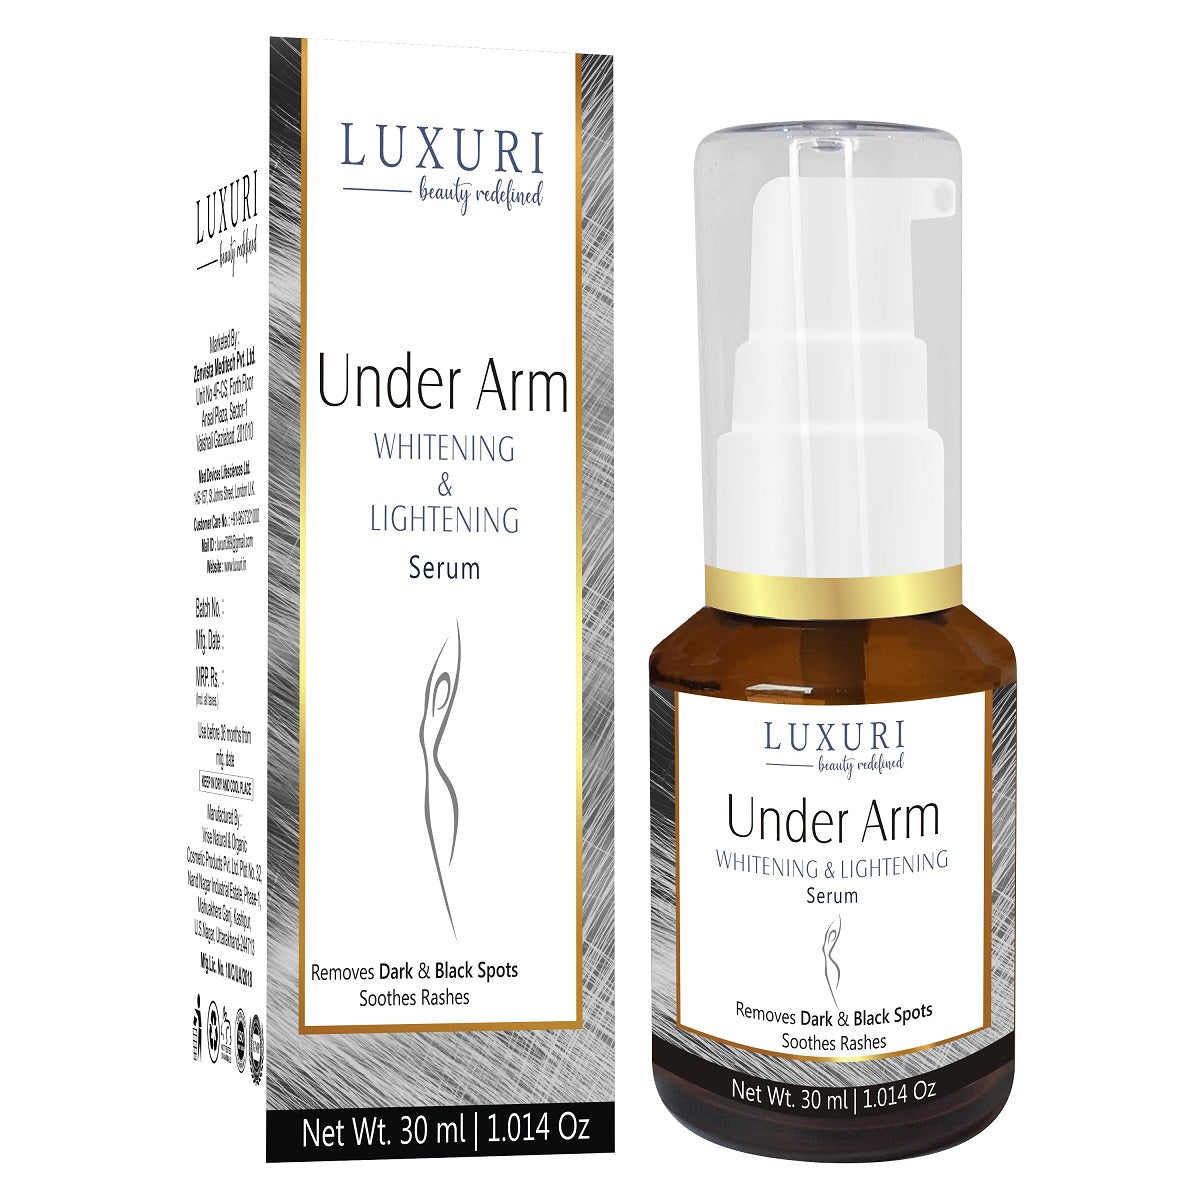 LUXURI Under Arms Whitening & Lightening Serum For Intimate Areas & Under Arms 30ml